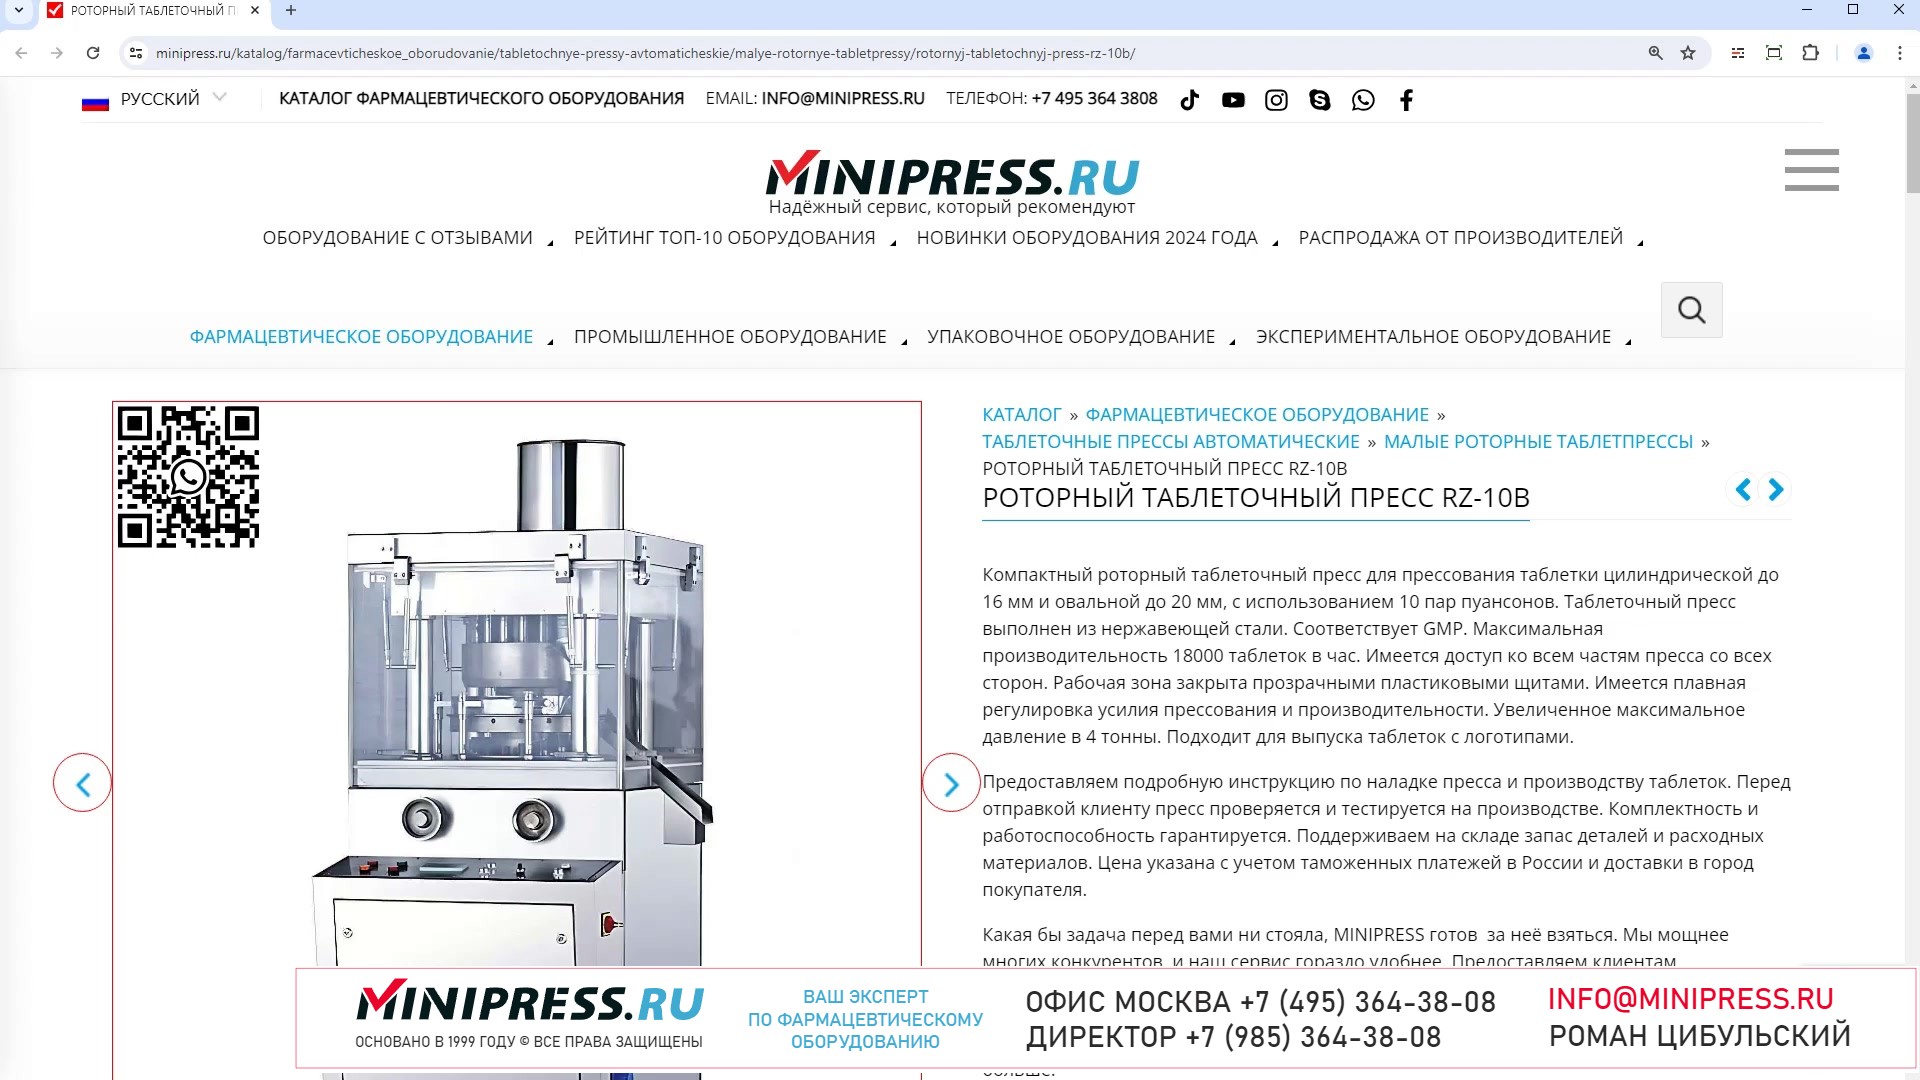 Minipress.ru Роторный таблеточный пресс RZ-10B